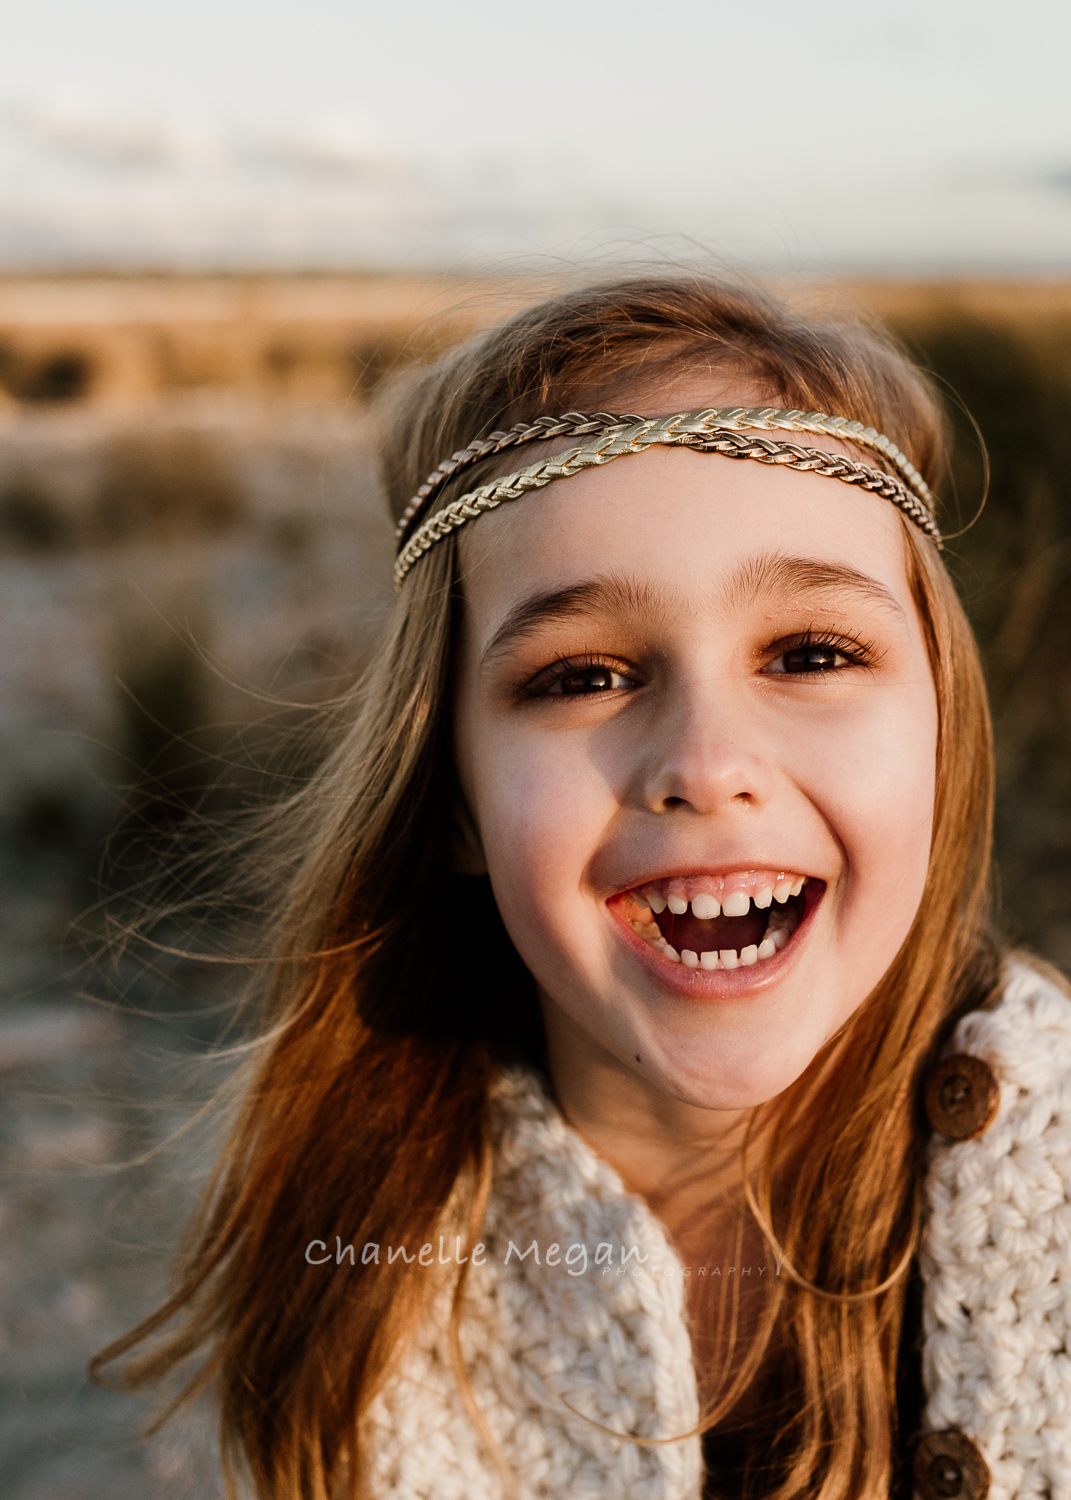 Chanelle Megan Photography strives to capture joyous photos of your children